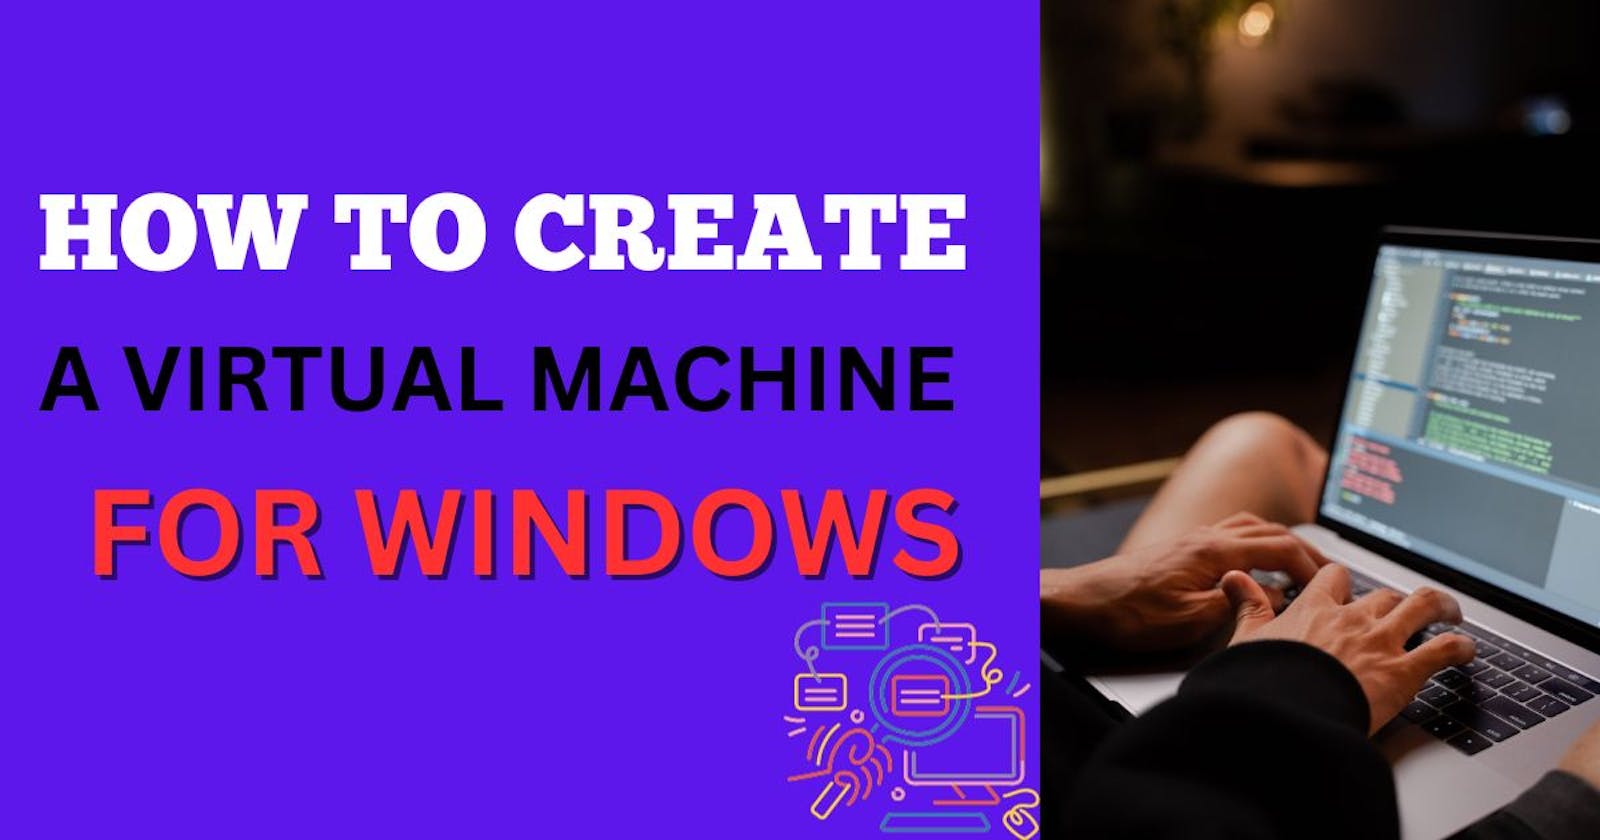 How To Create A Virtual Machine
                         For Windows